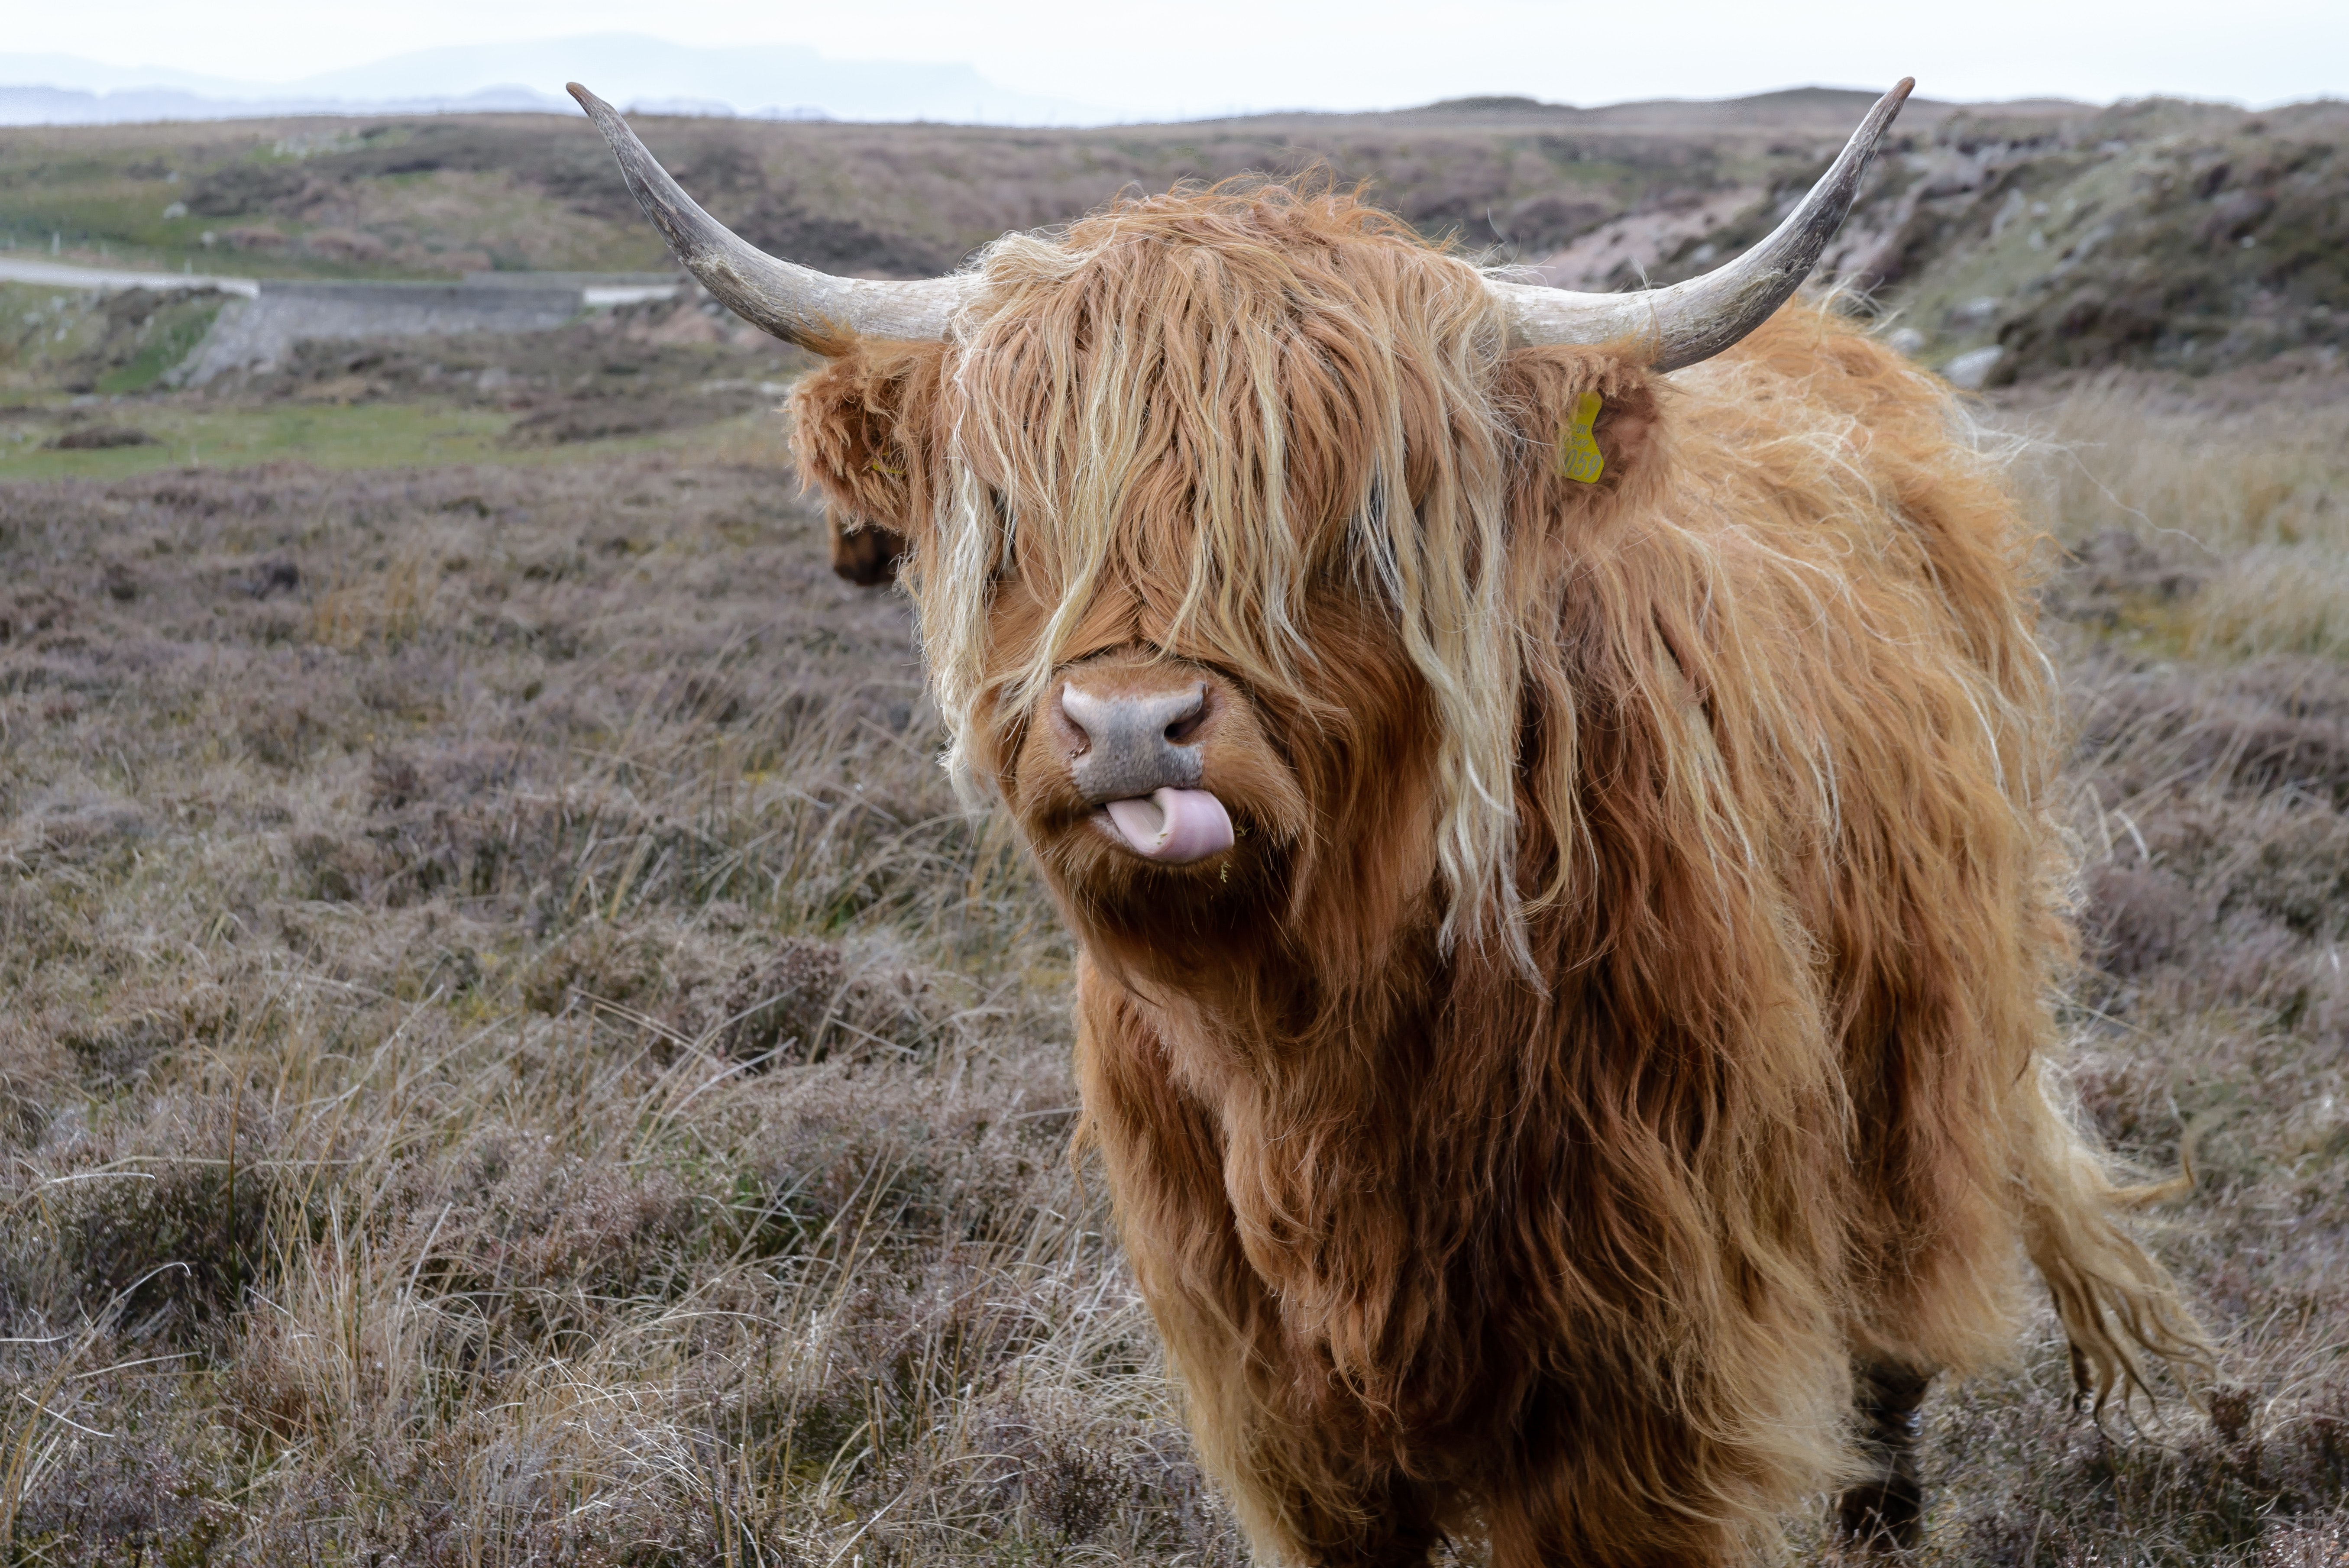 Free photos: Highland cattle - 3 images, Highland cattle photos ...